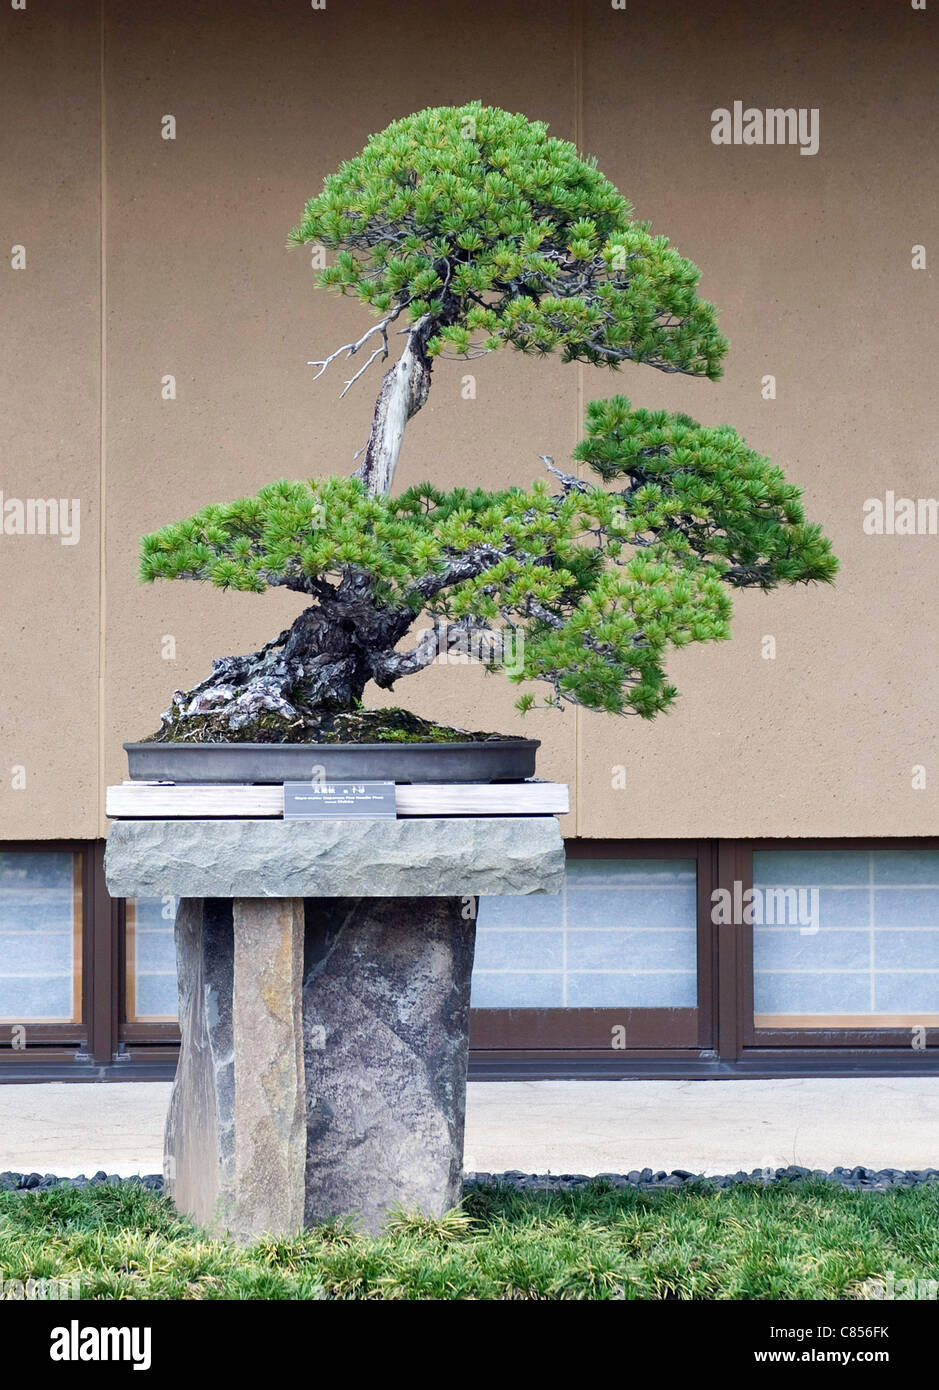 Photo shows 'Chihiro', a Japanese five-needle pine tree on display at the Saitama Omiya Bonsai Museum of Art in Saitama, Japan Stock Photo